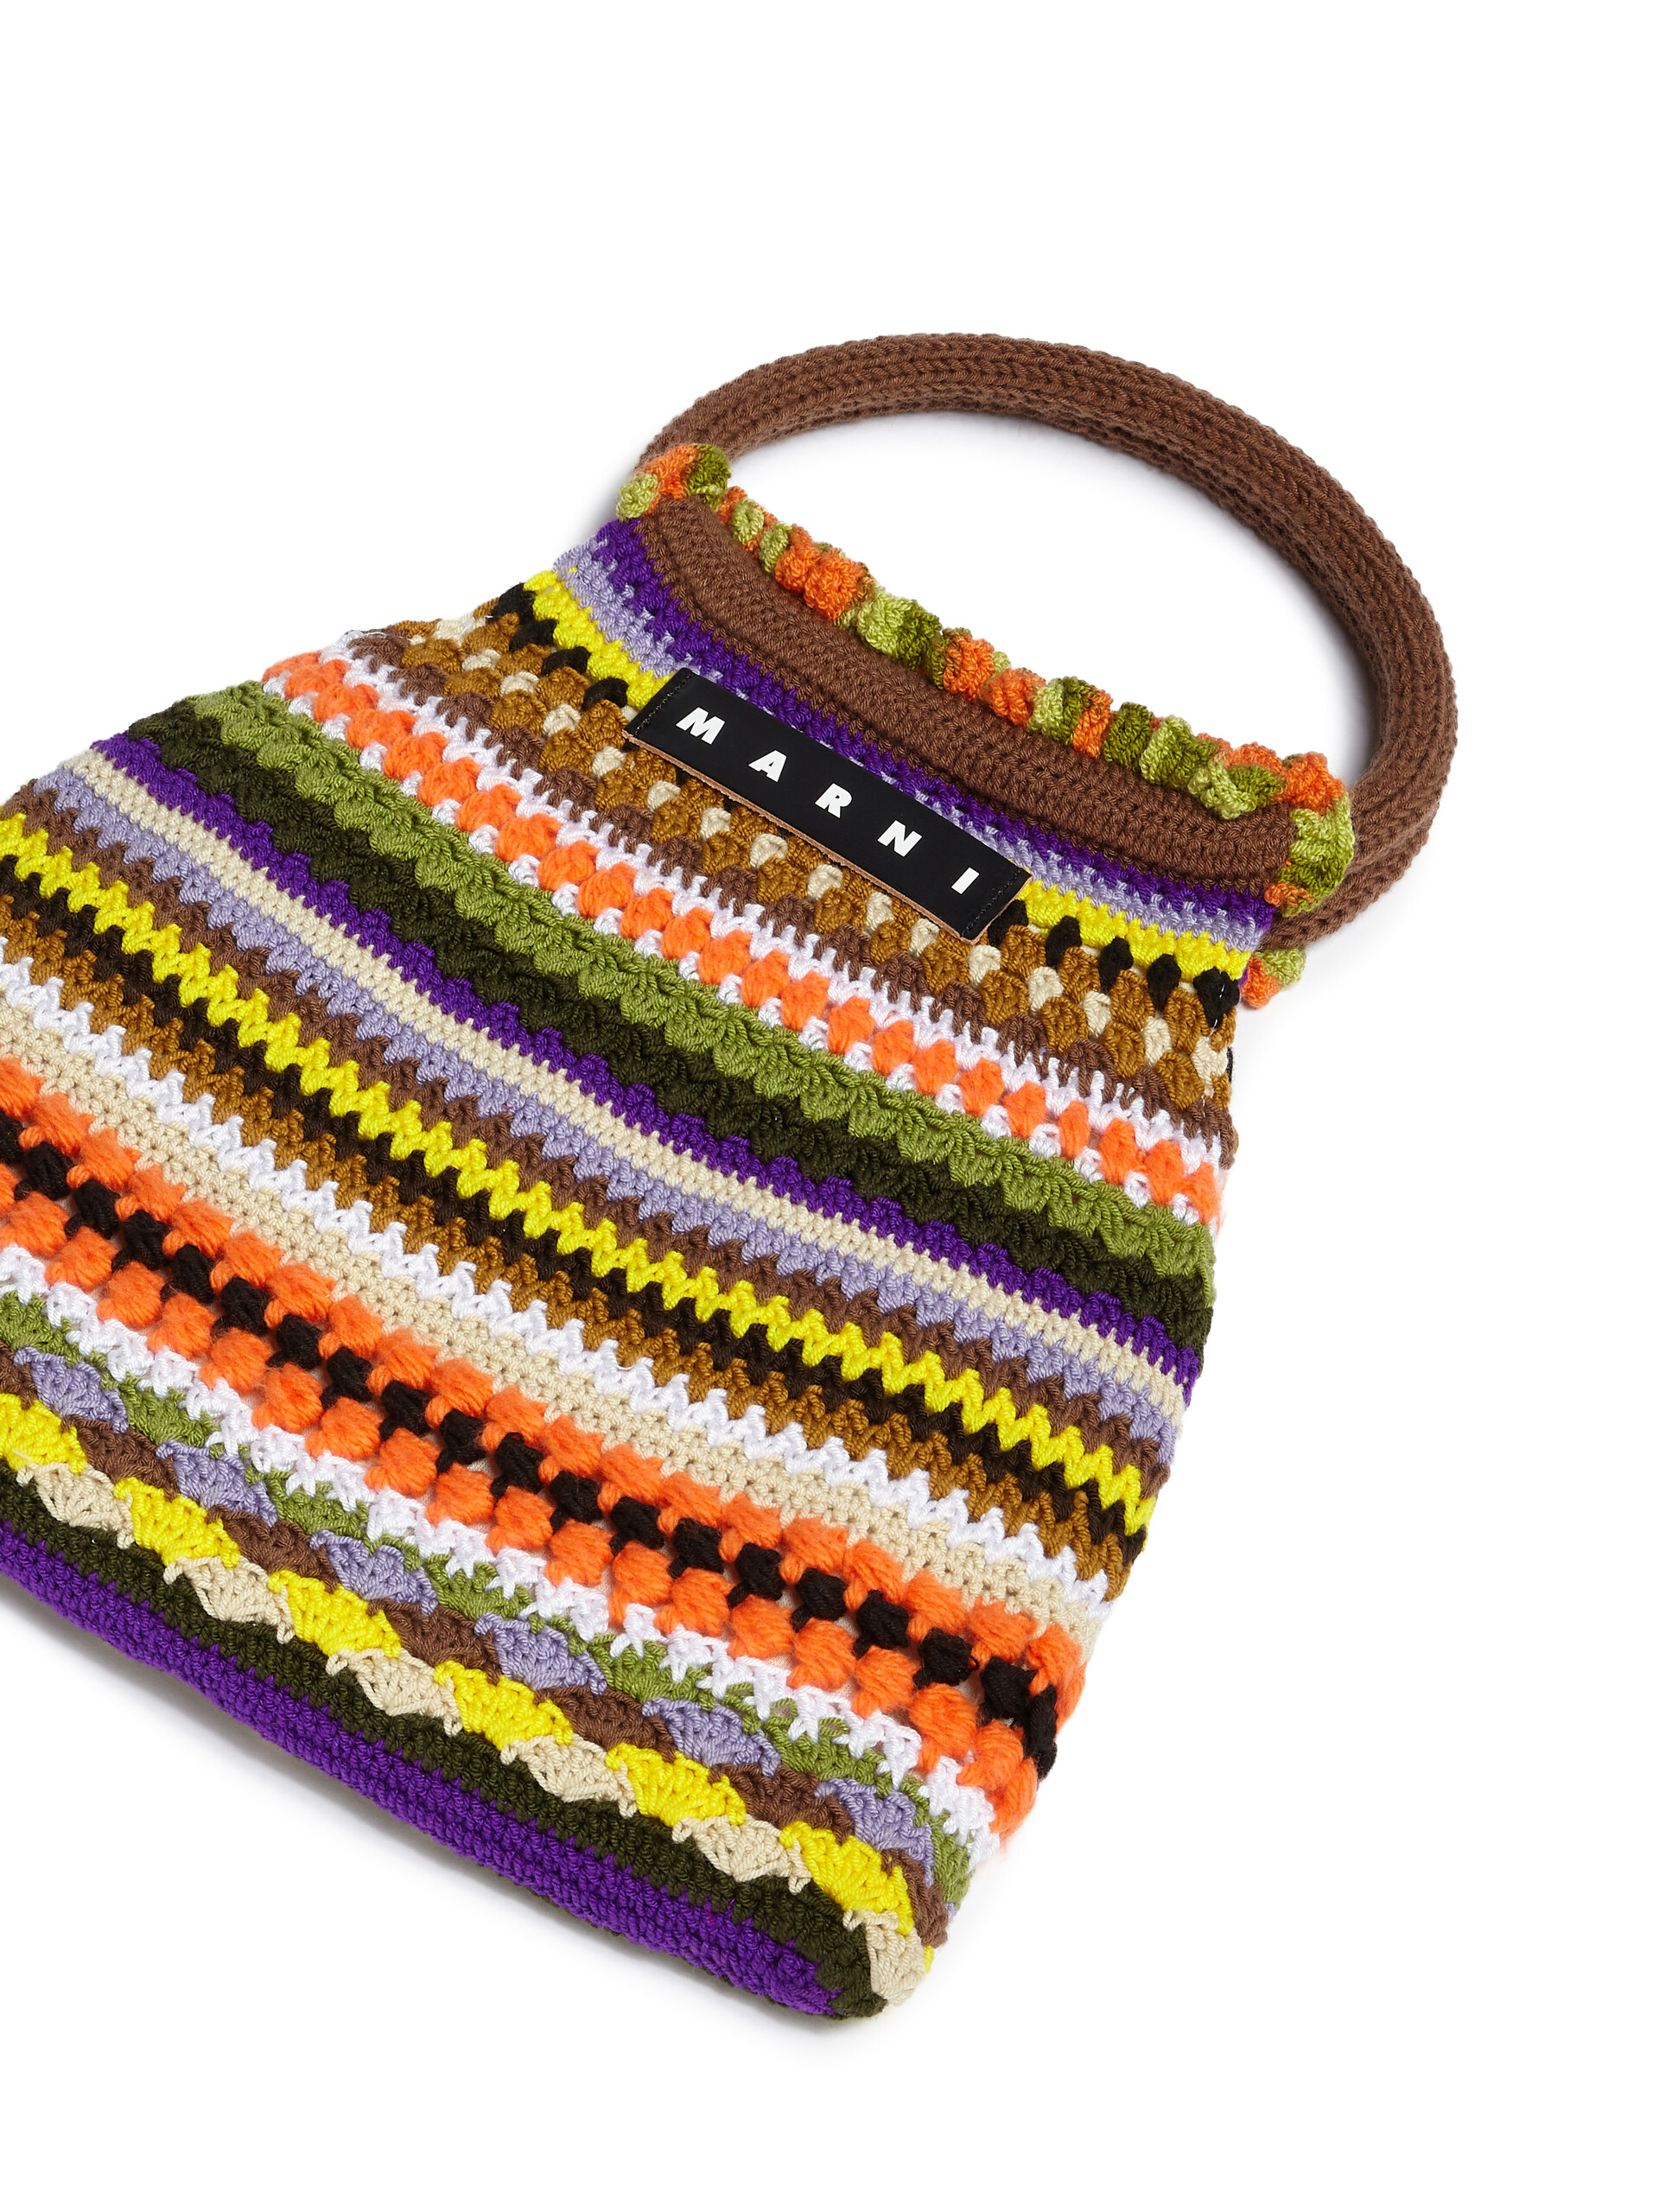 MARNI MARKET bag in brown crochet - Furniture - Image 4